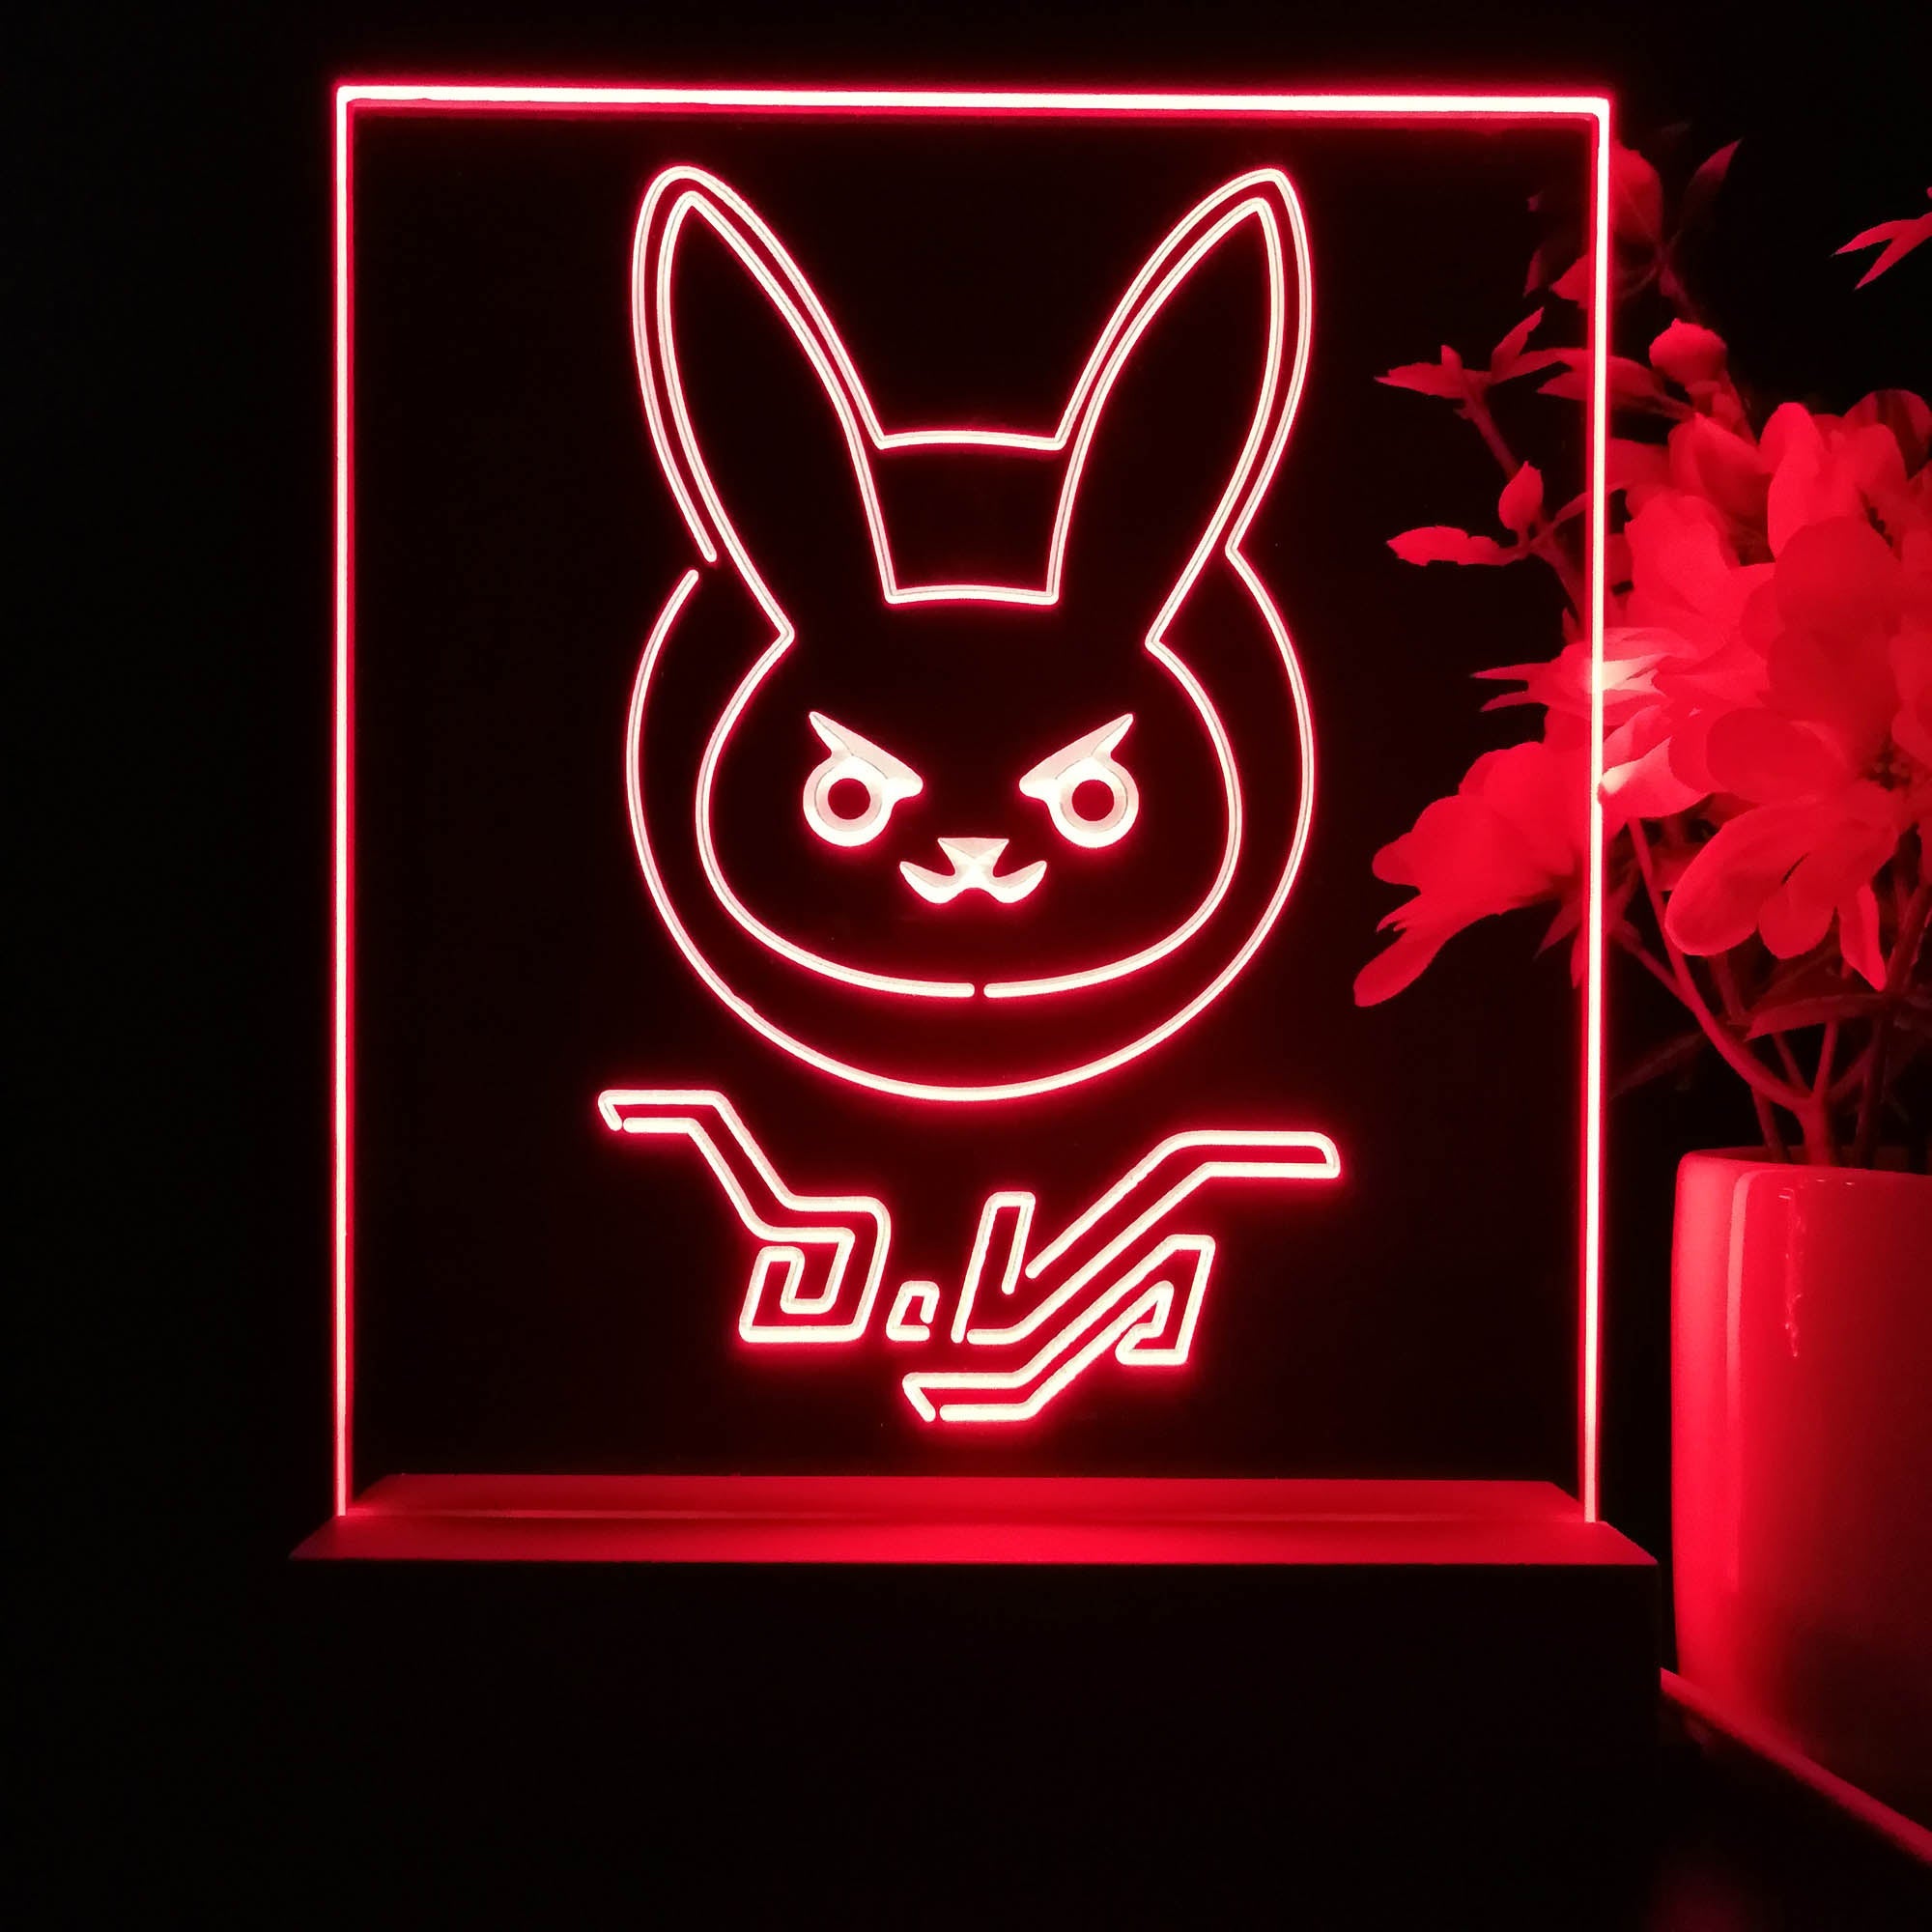 Overwatch Dva Game Room LED Sign Lamp Display